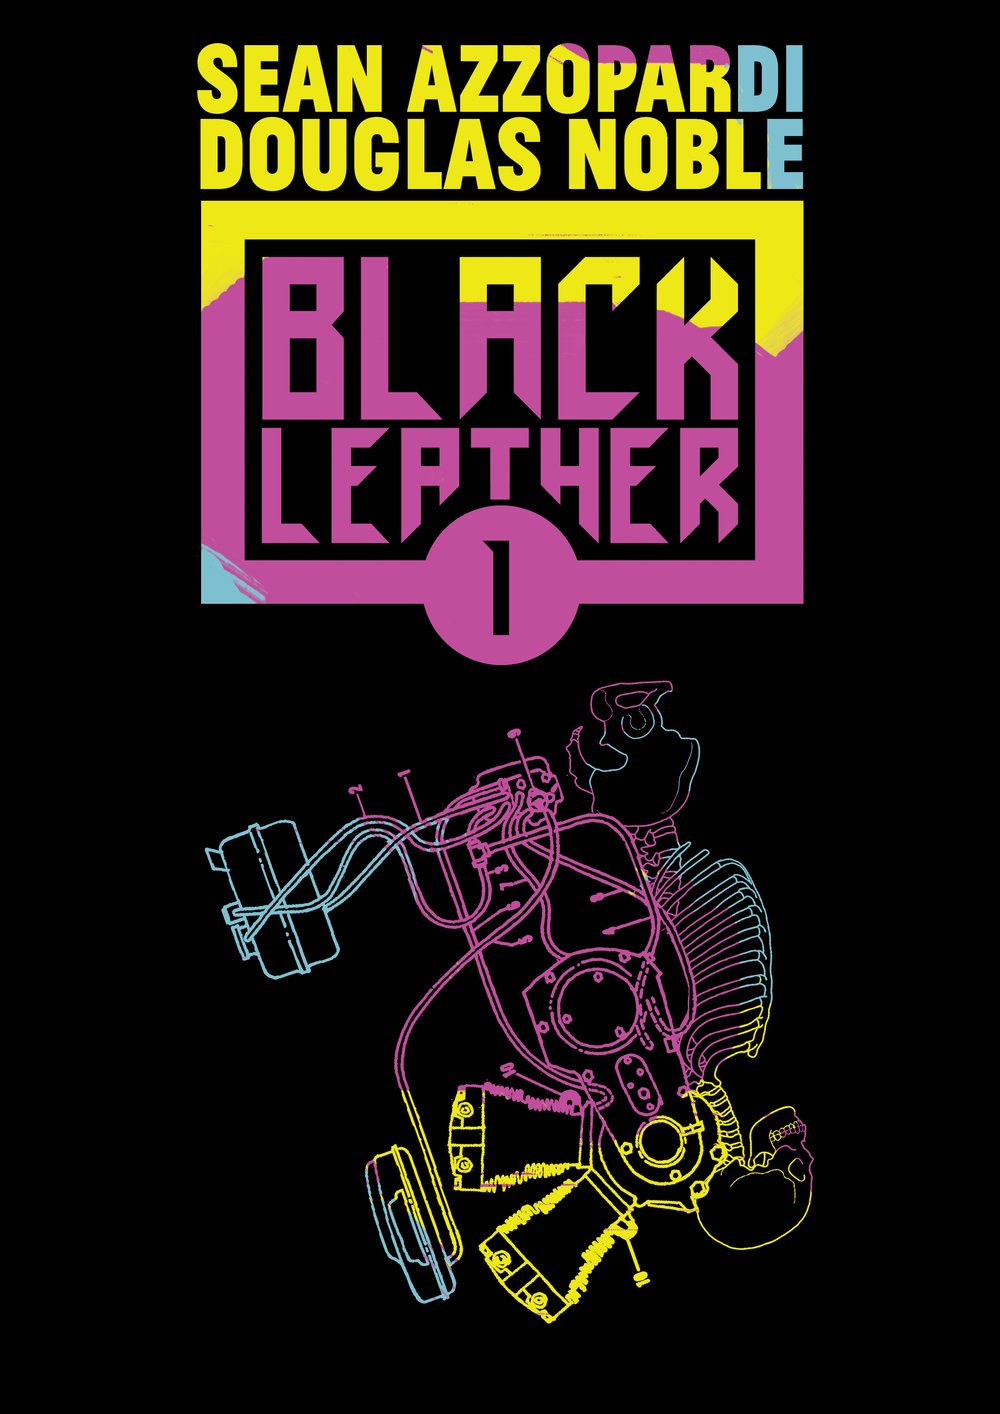 Black Leather 1